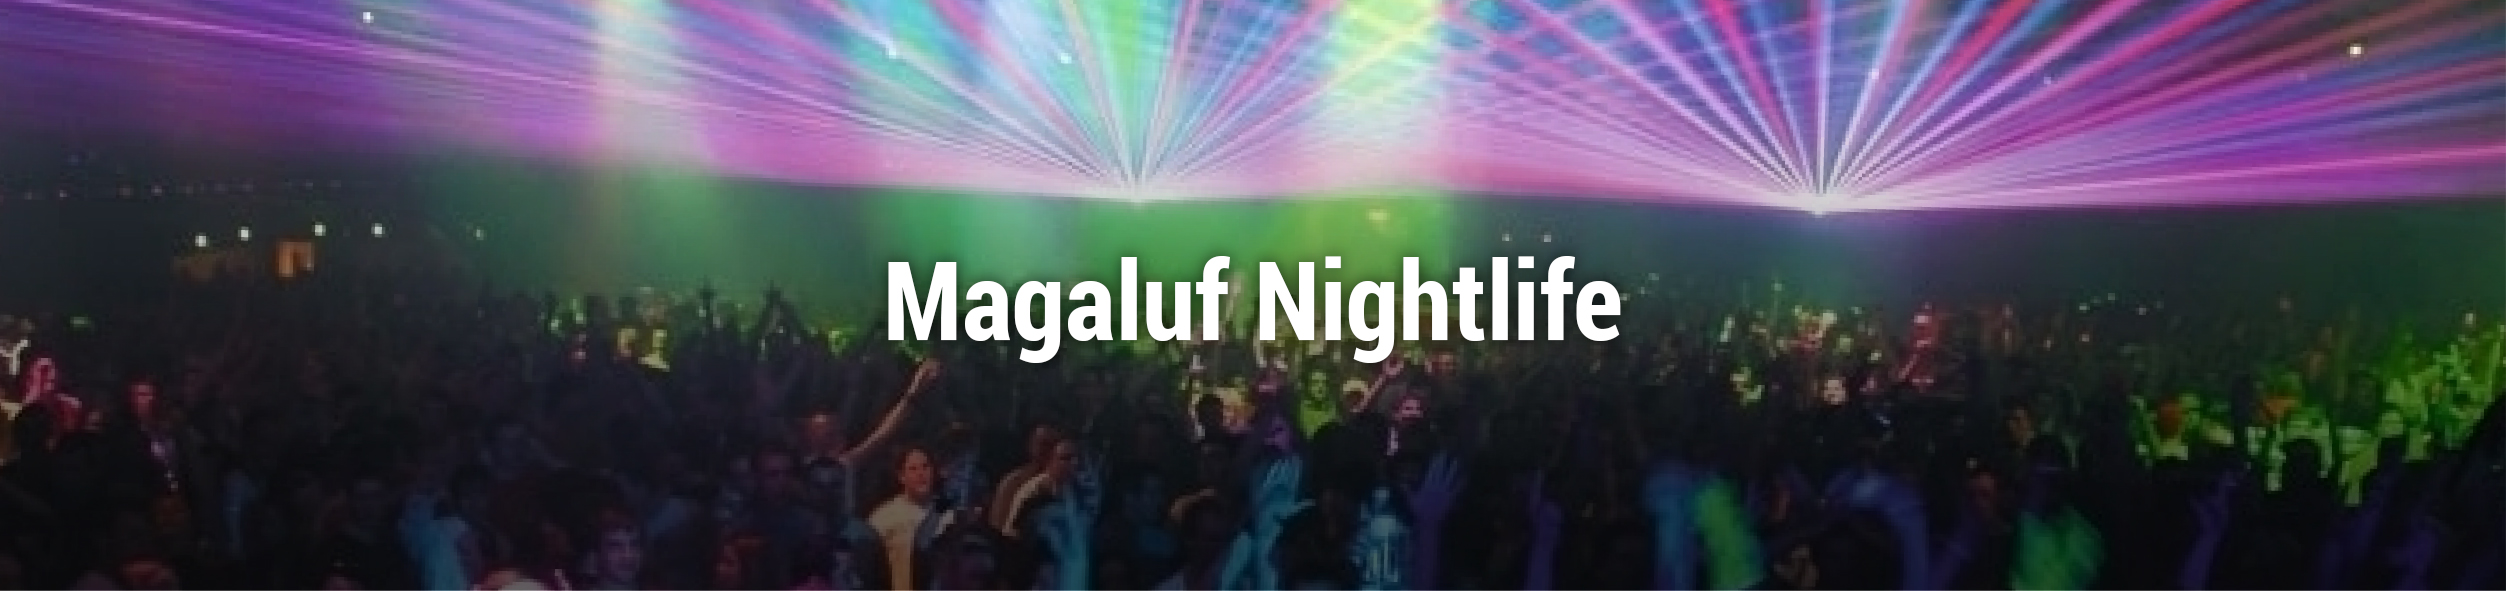 Magaluf Nightlife